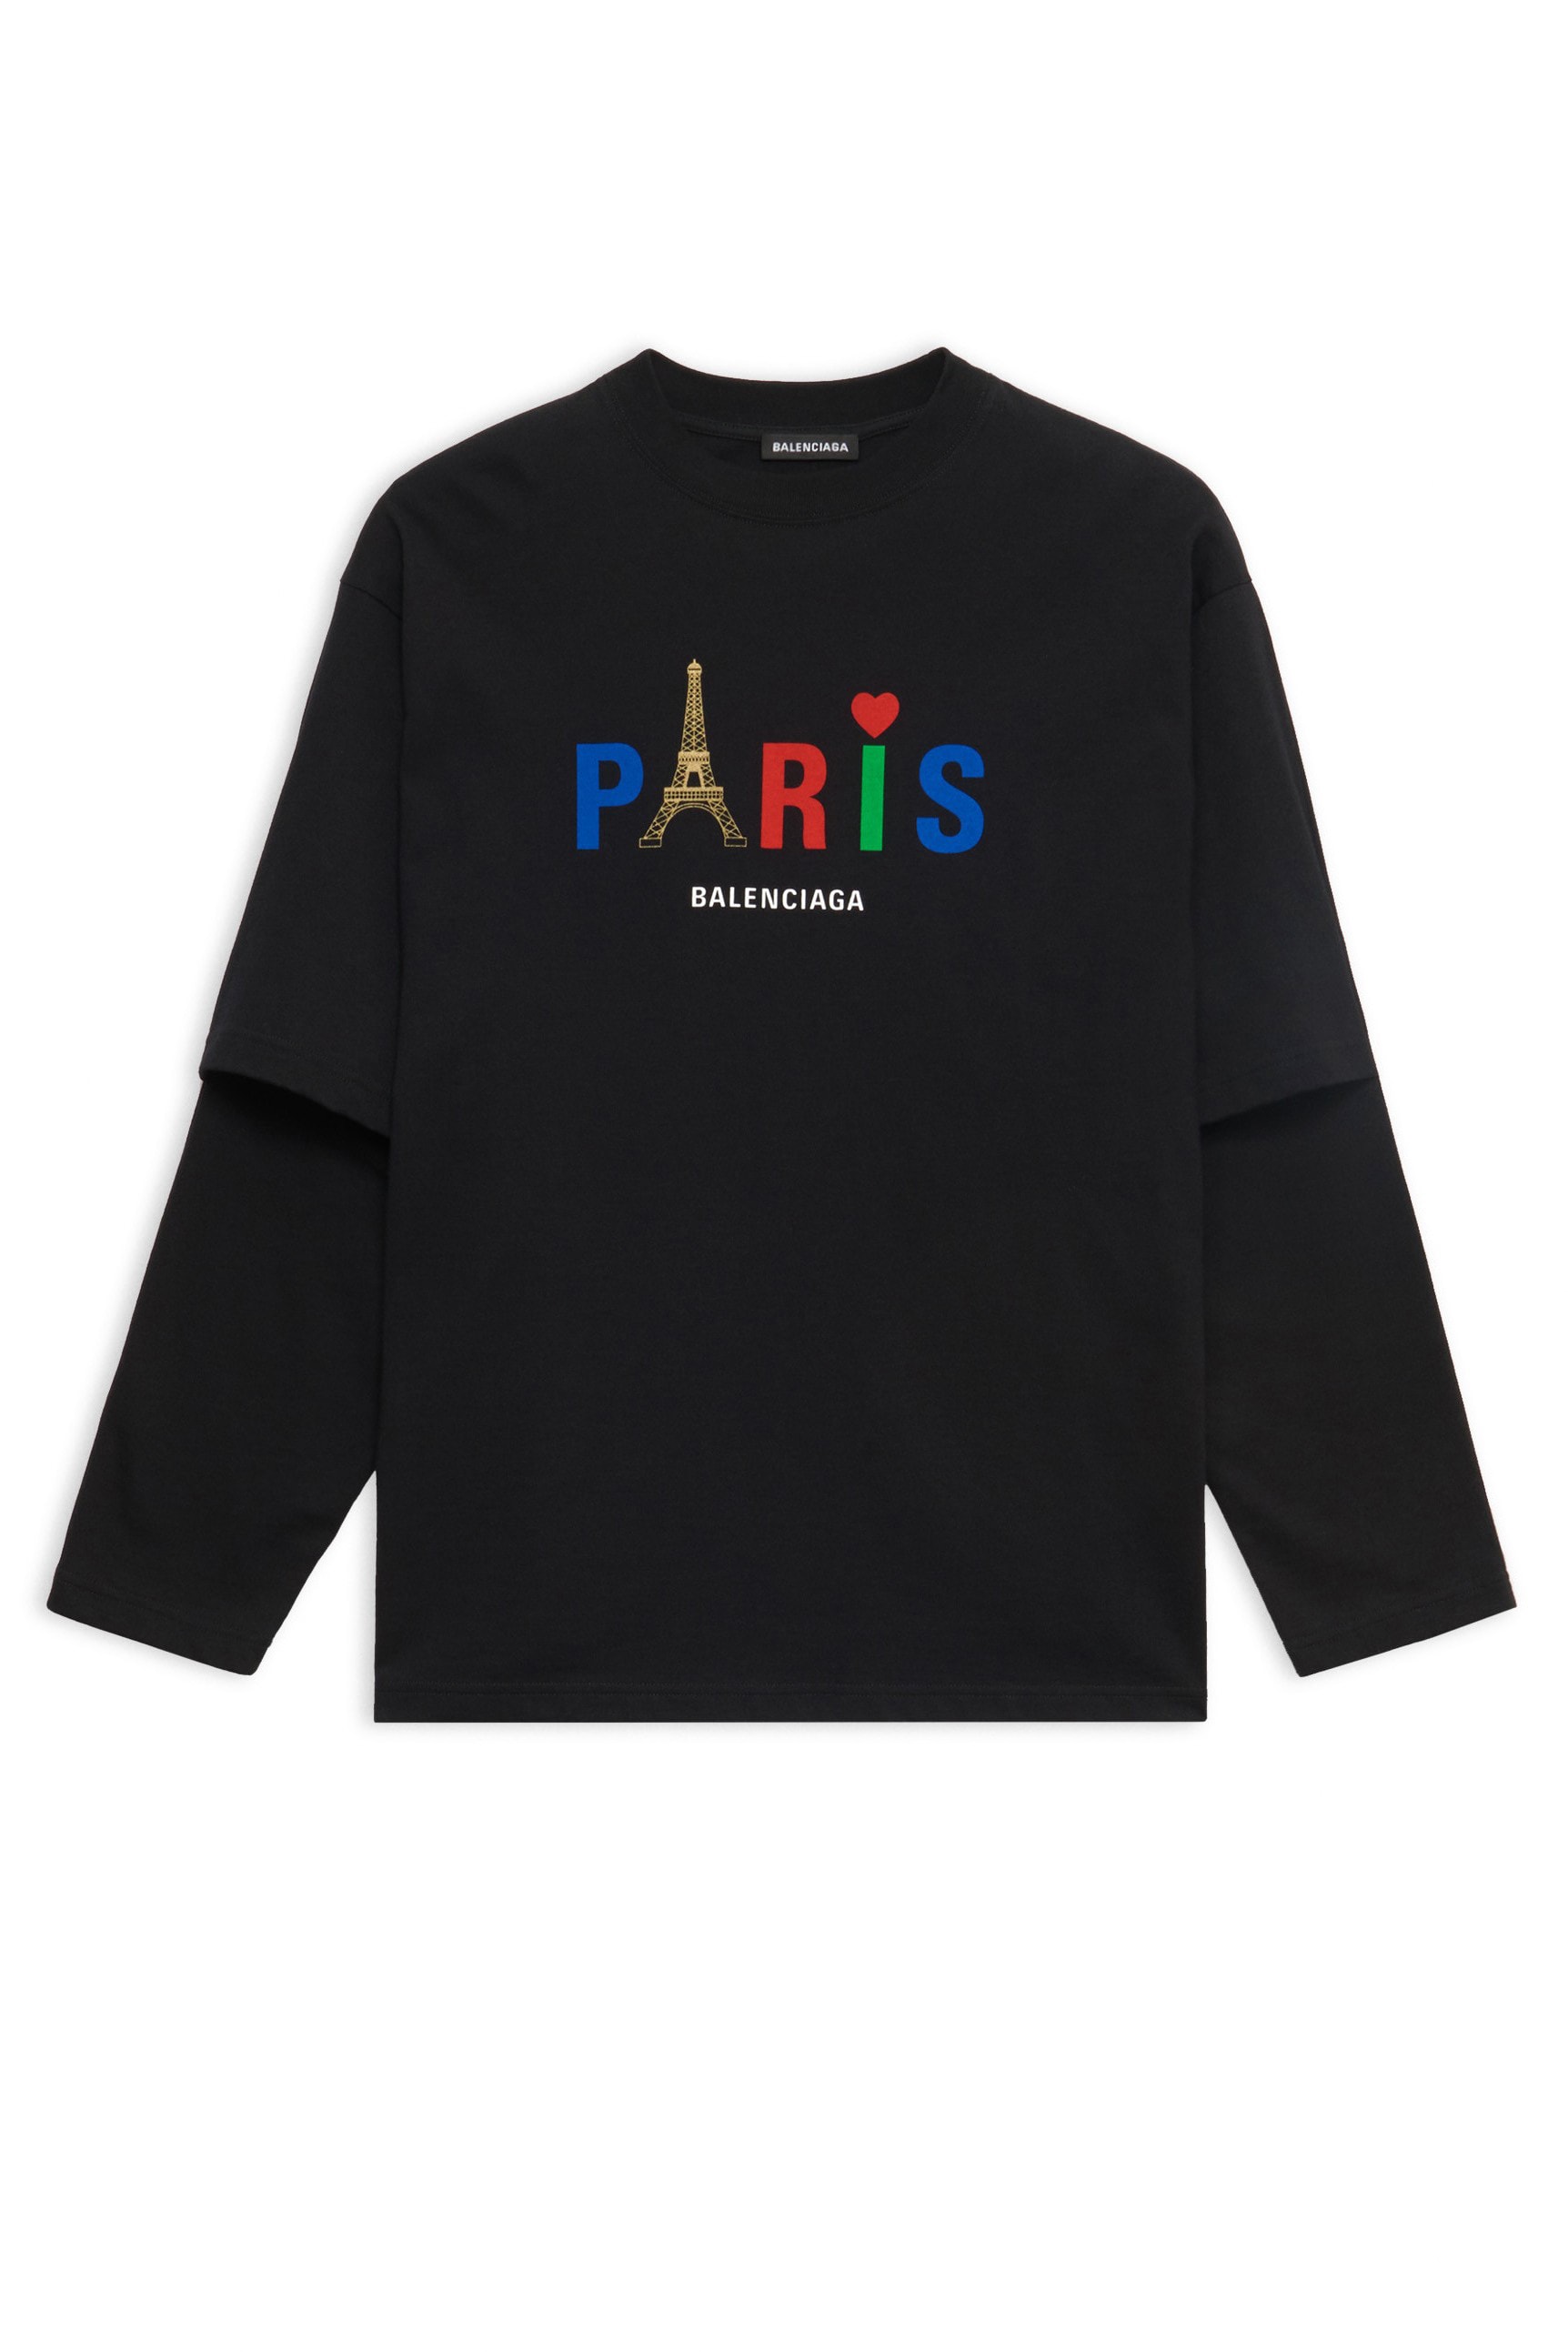 Balenciaga Eiffel Tower Fall Winter 2019 Items paris red white blue black jacket hoodie shirts